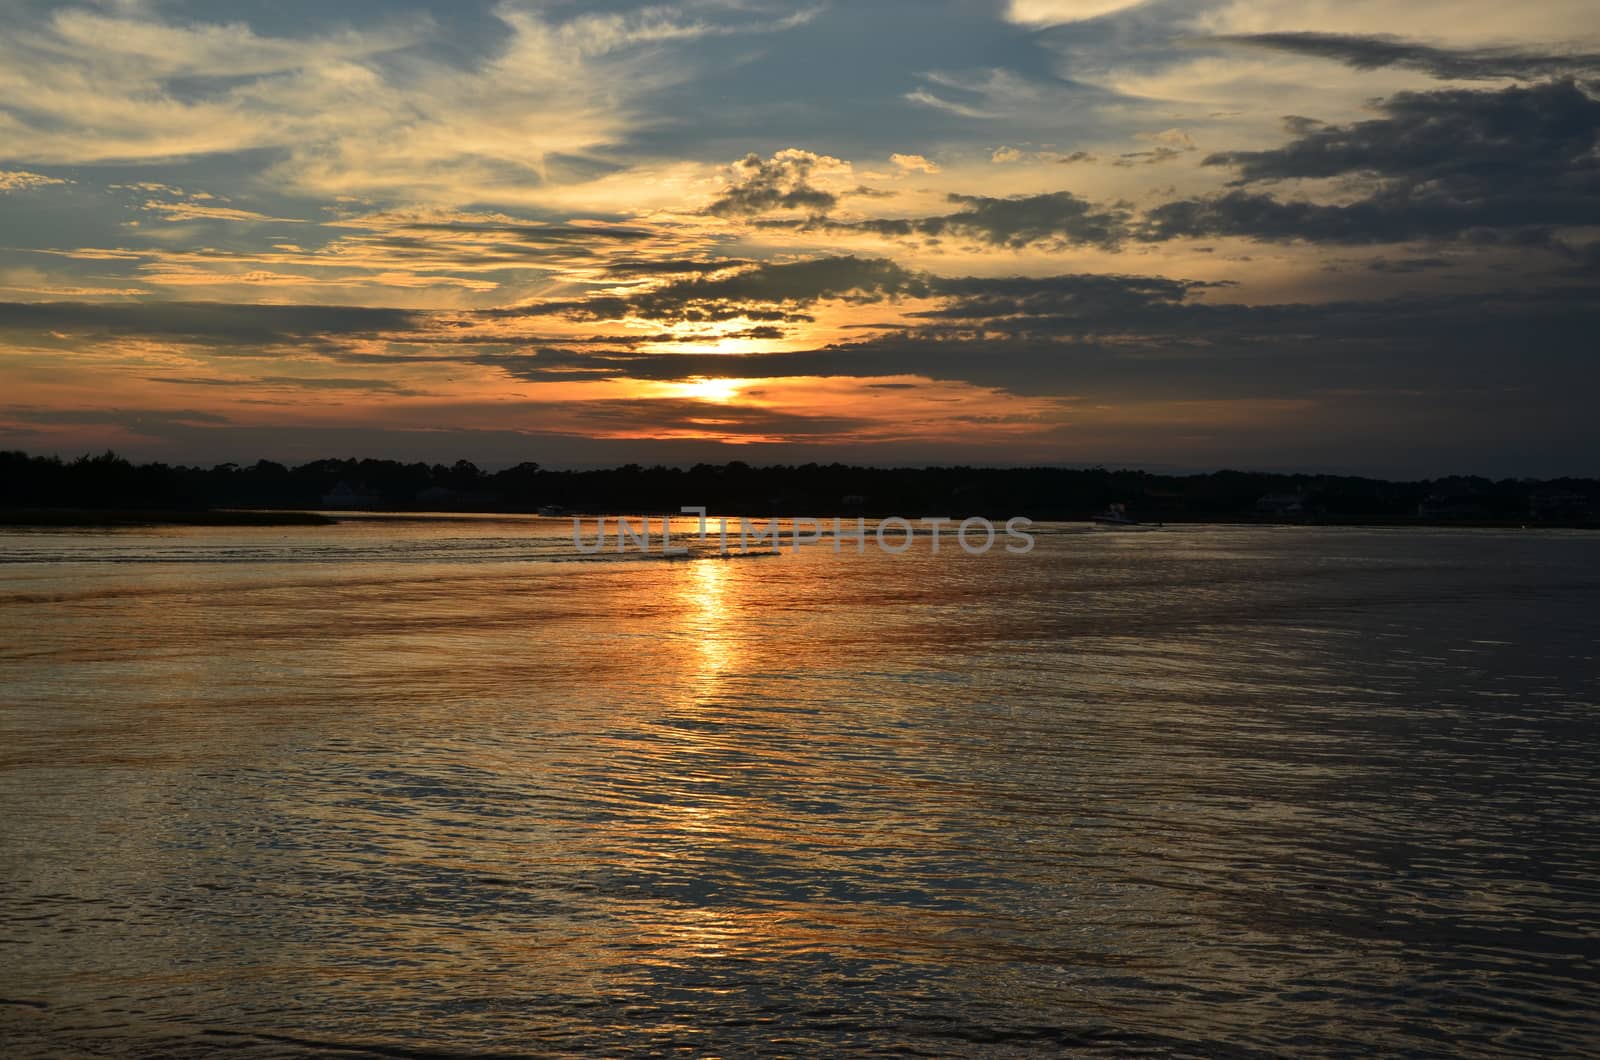 Ocean sunset by northwoodsphoto